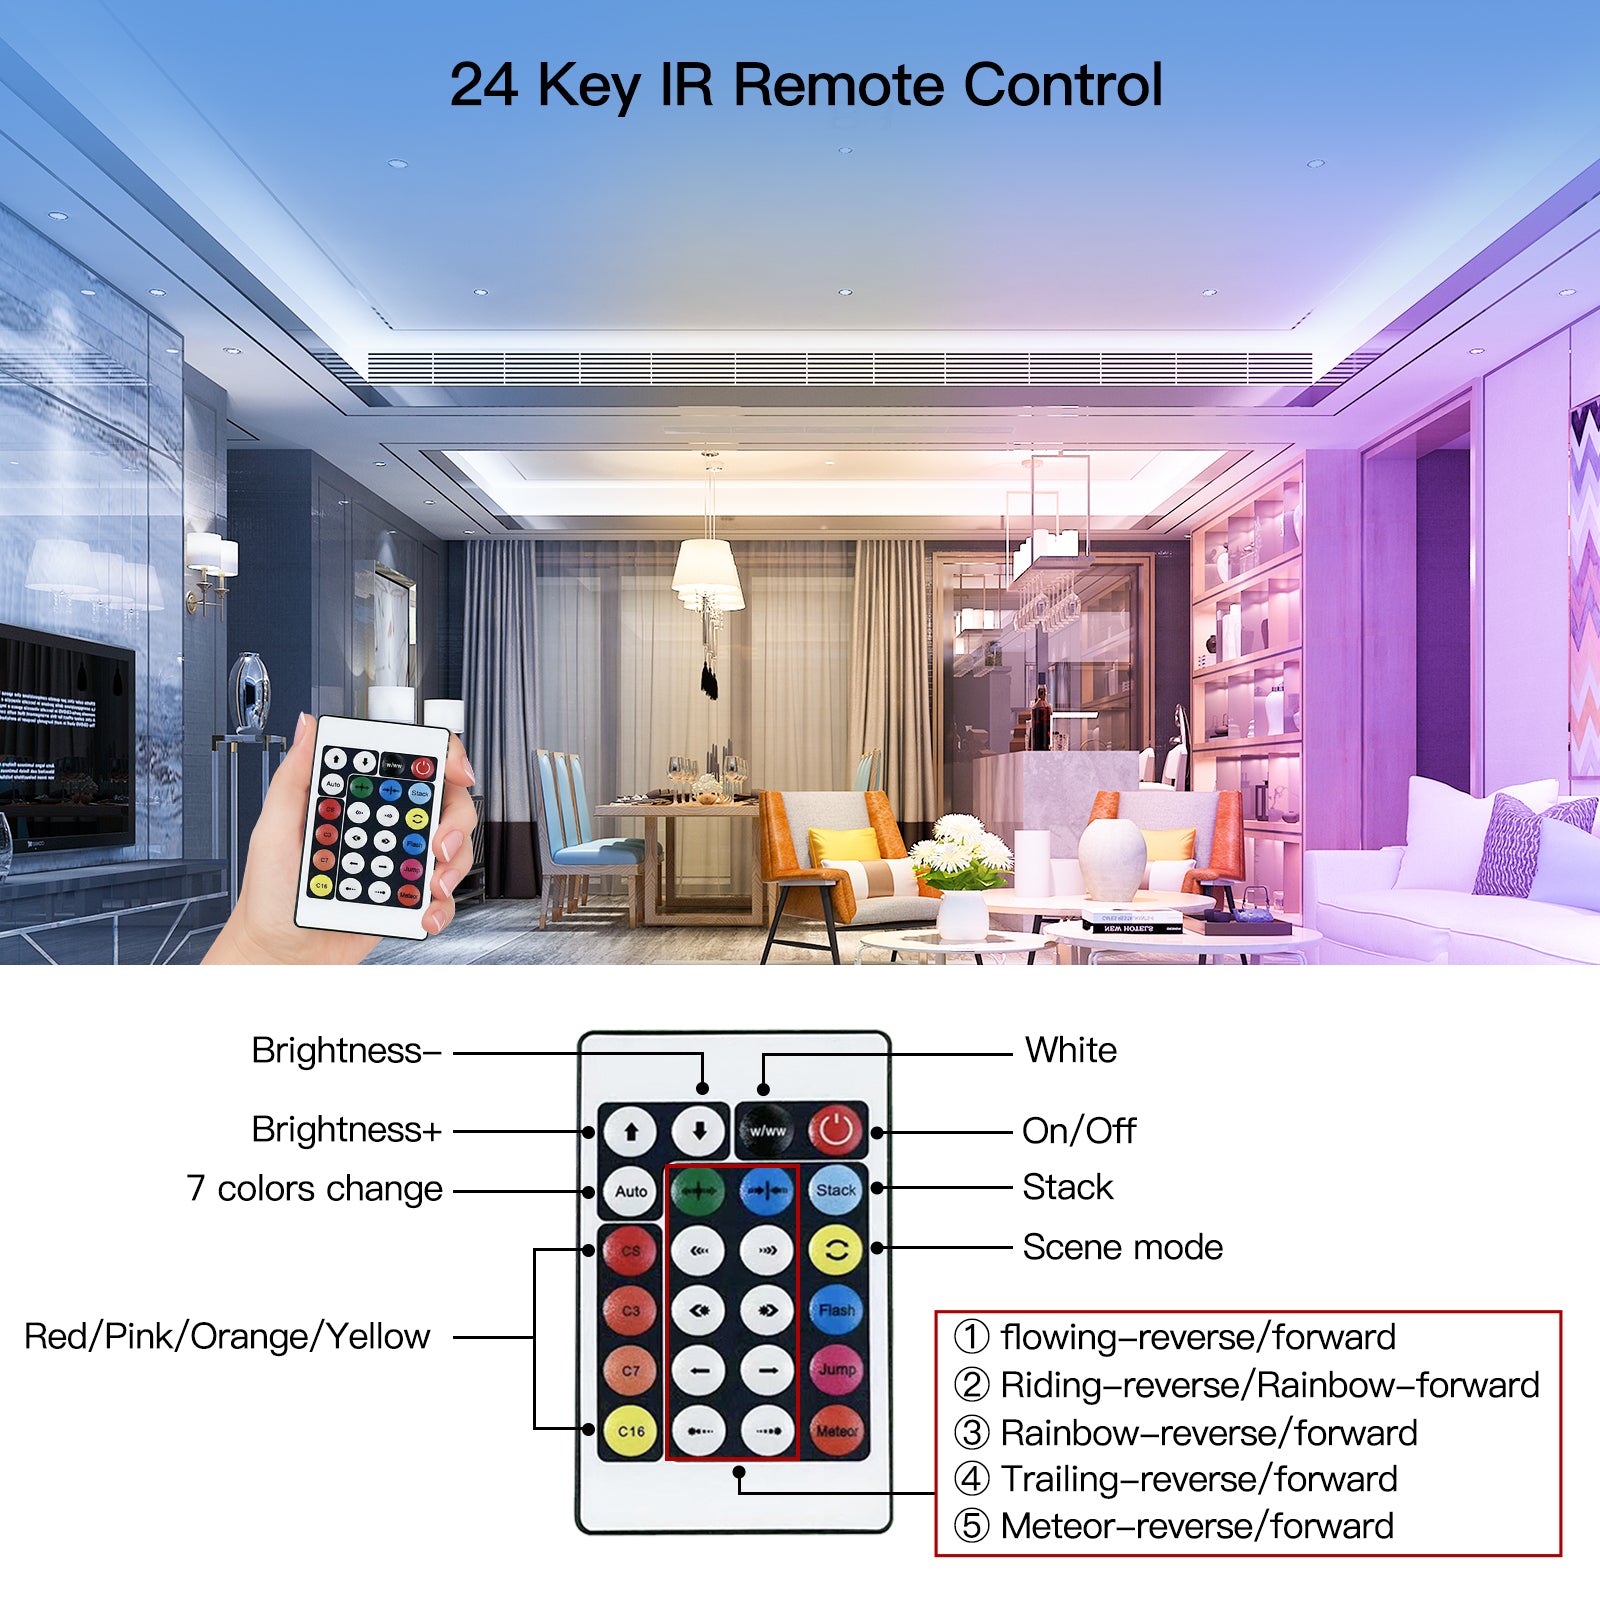 24 Key IR Remote Control